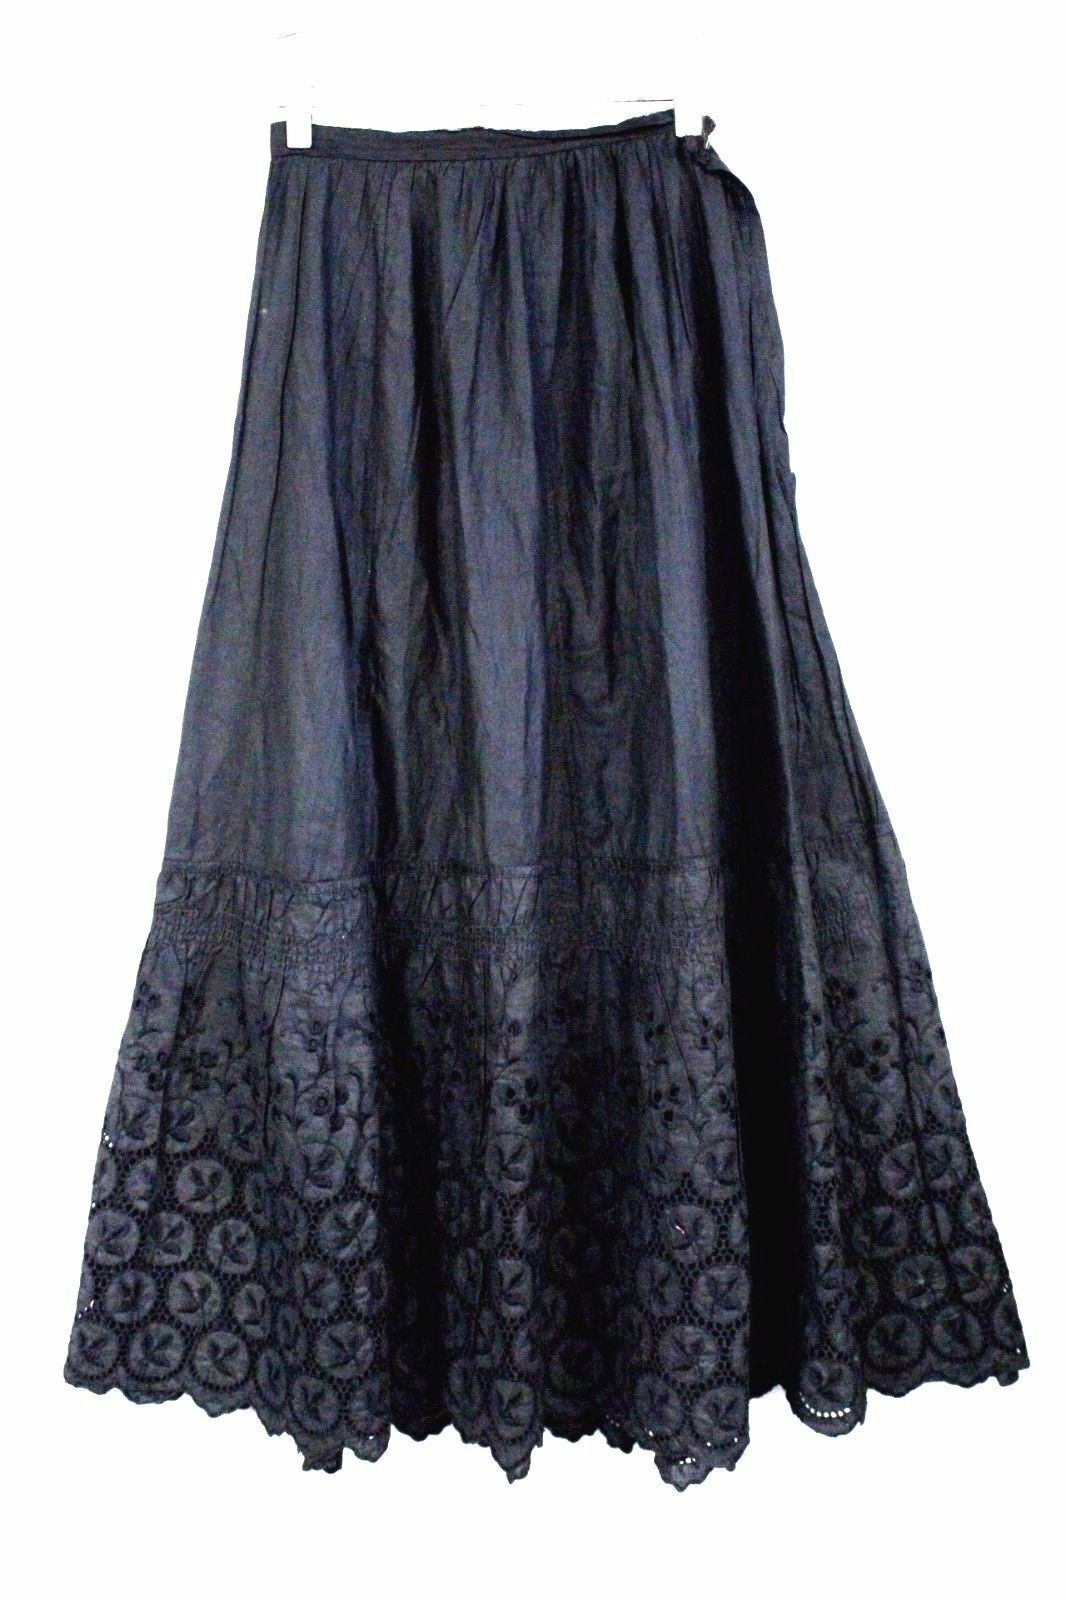 1880s Antique Skirt Black Cotton Petticoat Extra Fancy Full 24